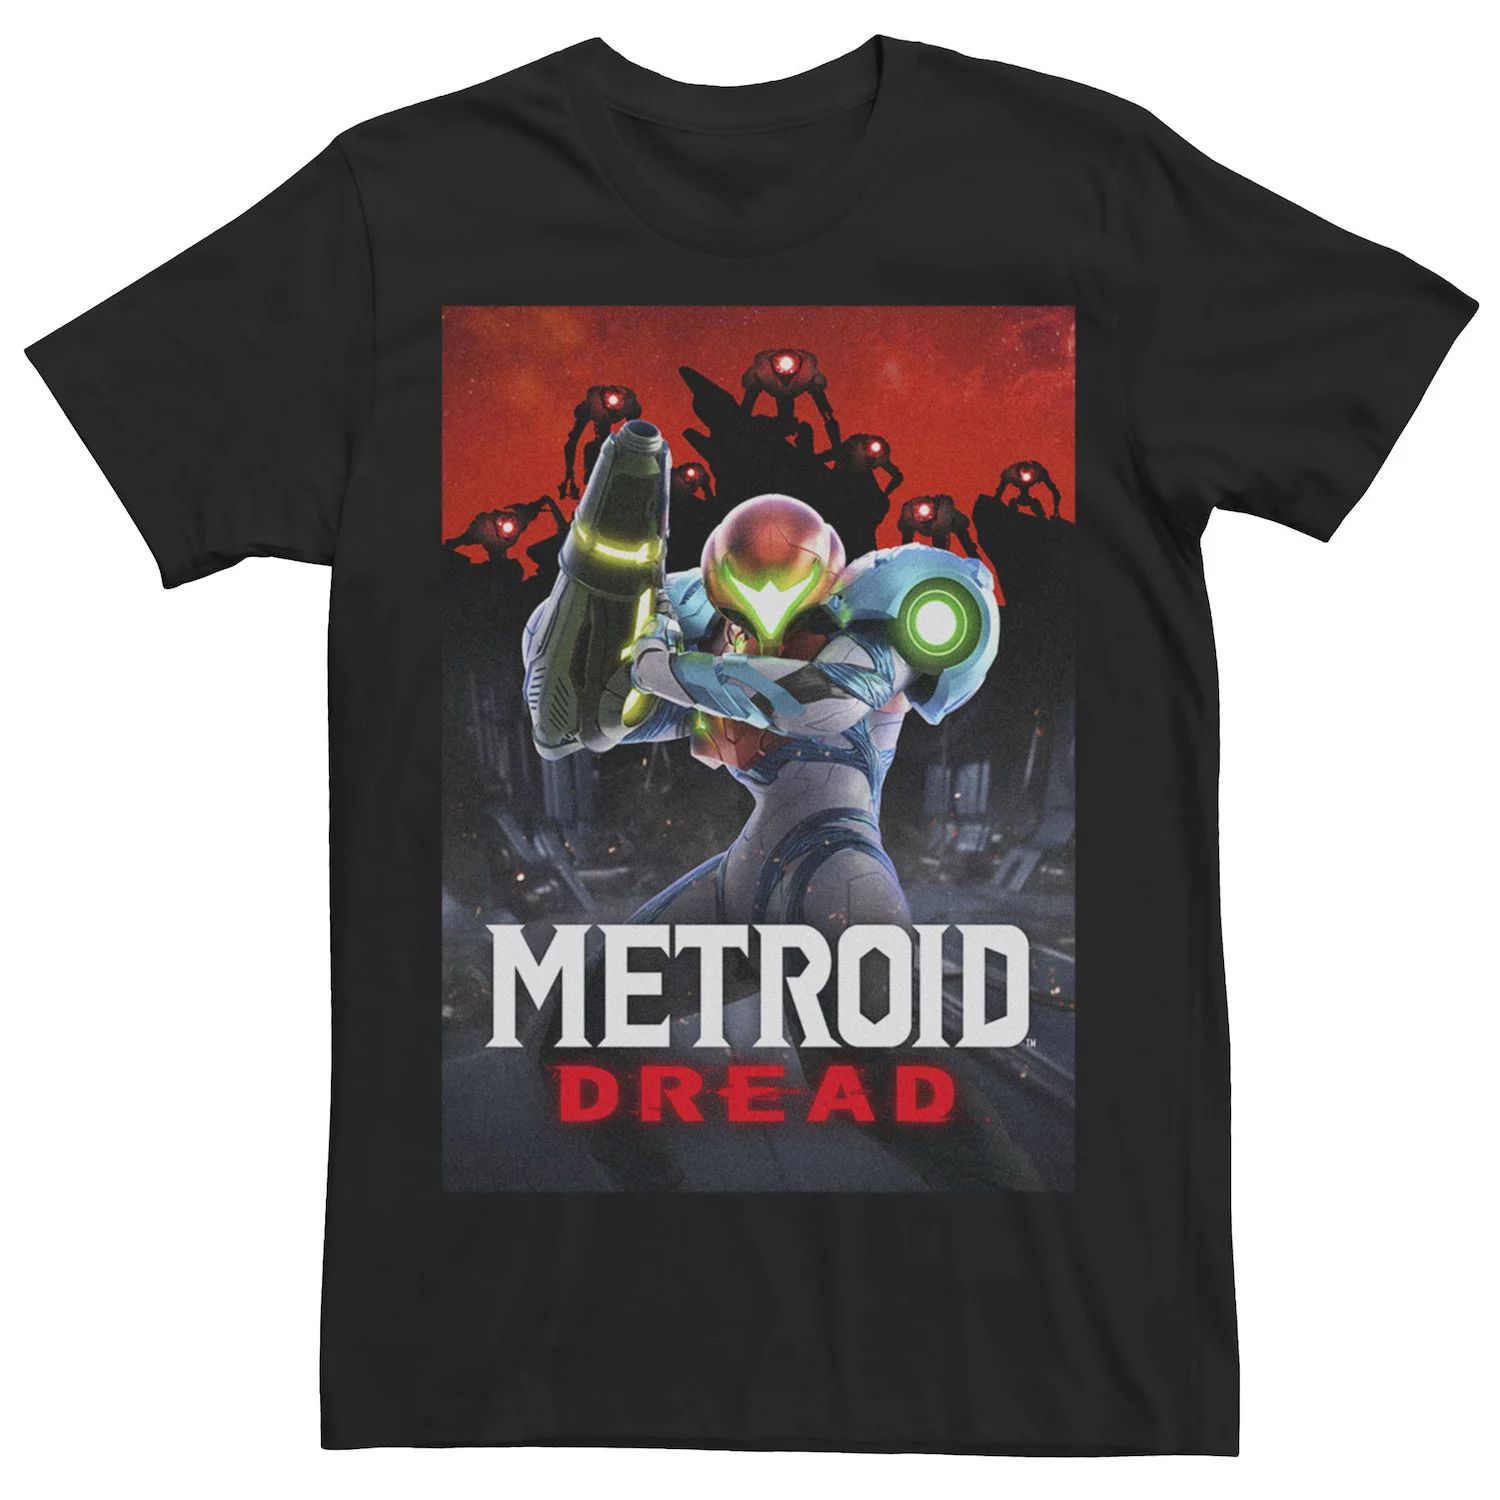 Мужская футболка с плакатом Metroid Prime Dread Battle Licensed Character swtich amiibo карта galaxy warrior связь sahms emmi metroid dread